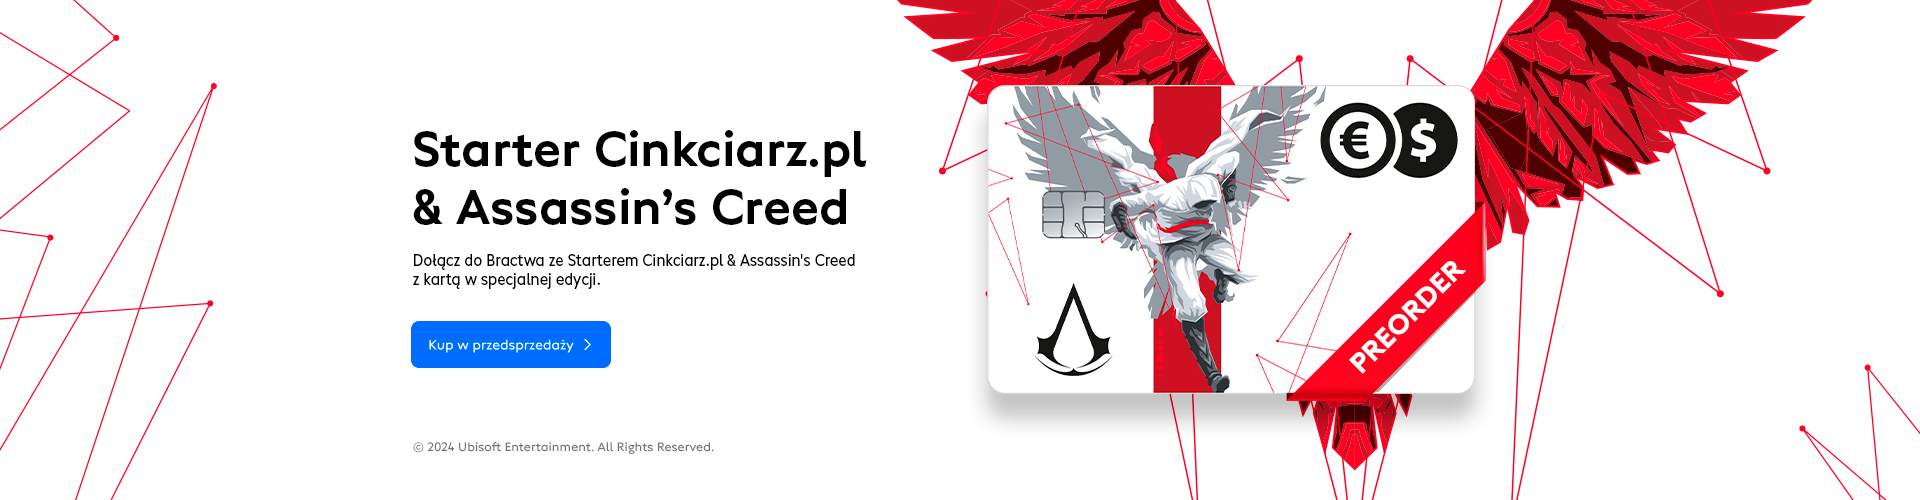 Starter Cinkciarz.pl & Assassin’s Creed